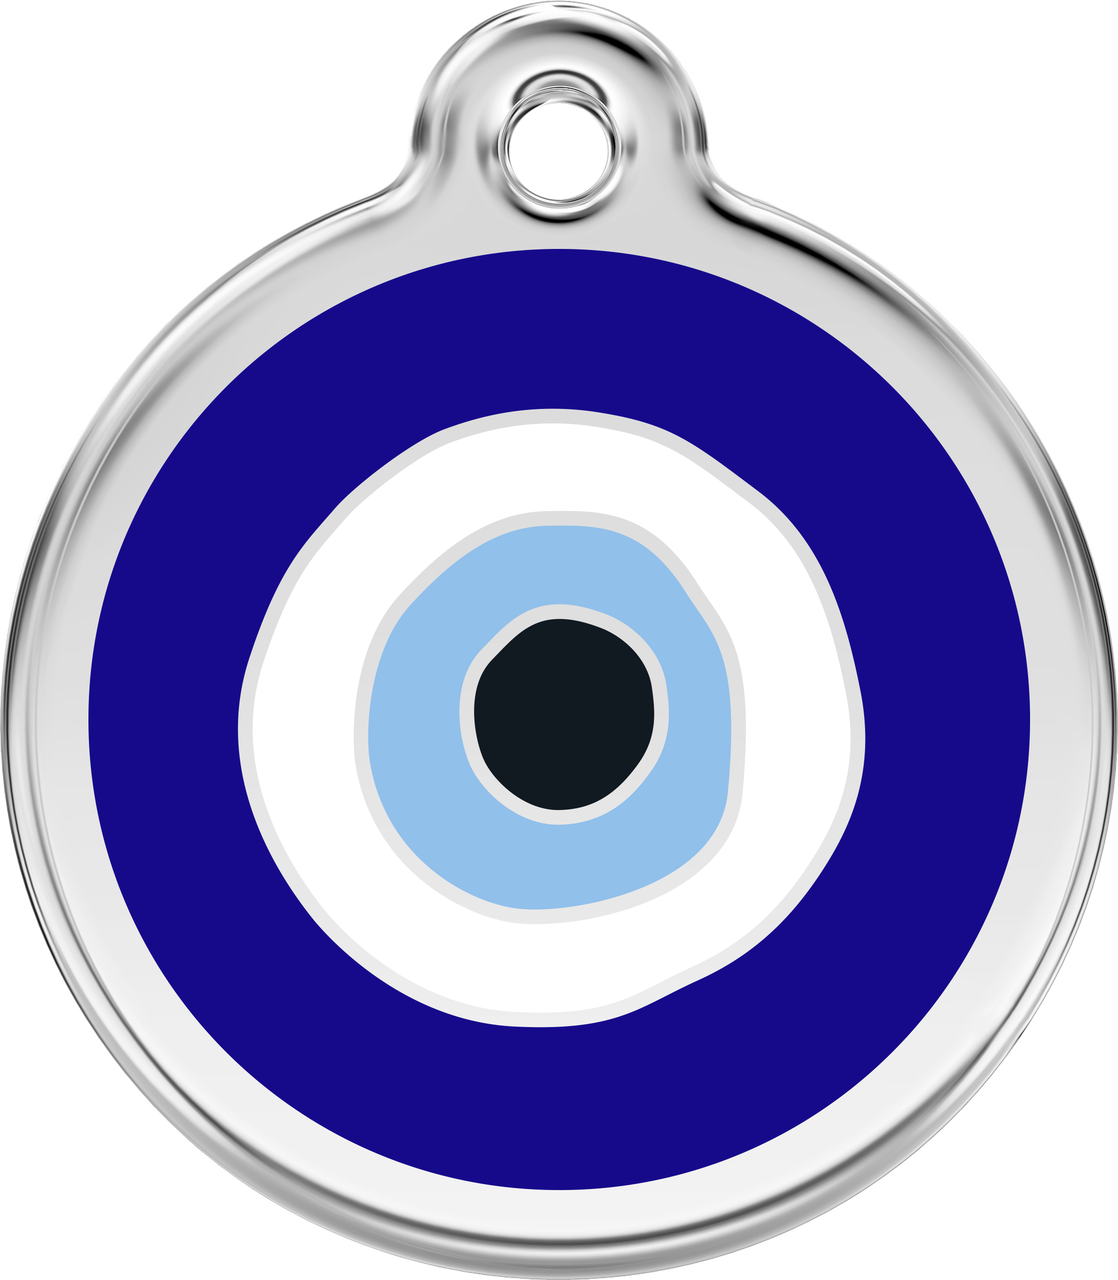 A Blue And White Eye Charm